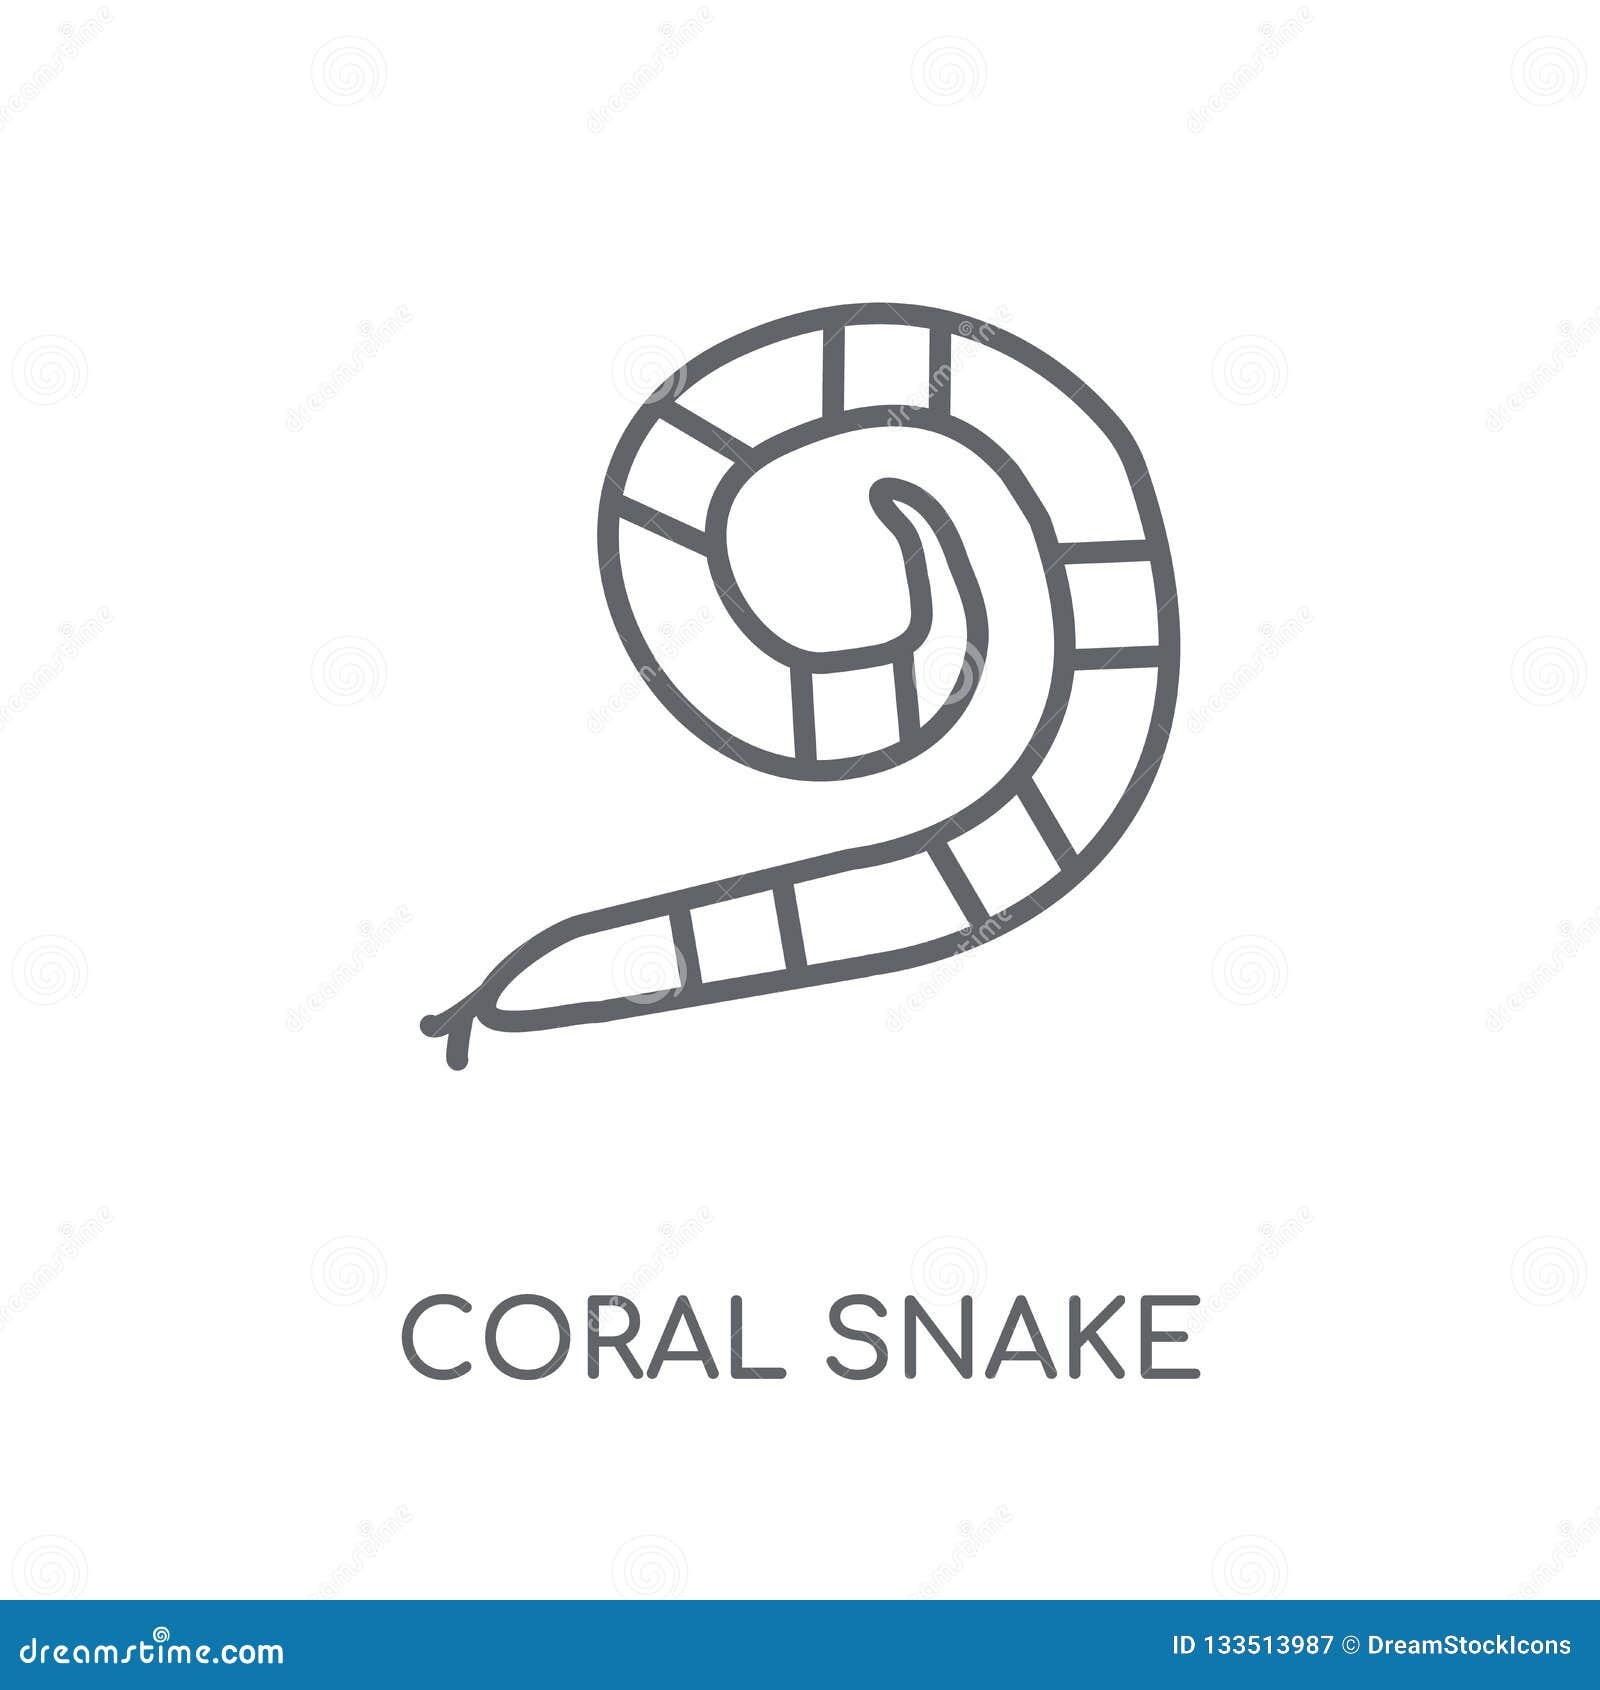 coral snake linear icon. modern outline coral snake logo concept